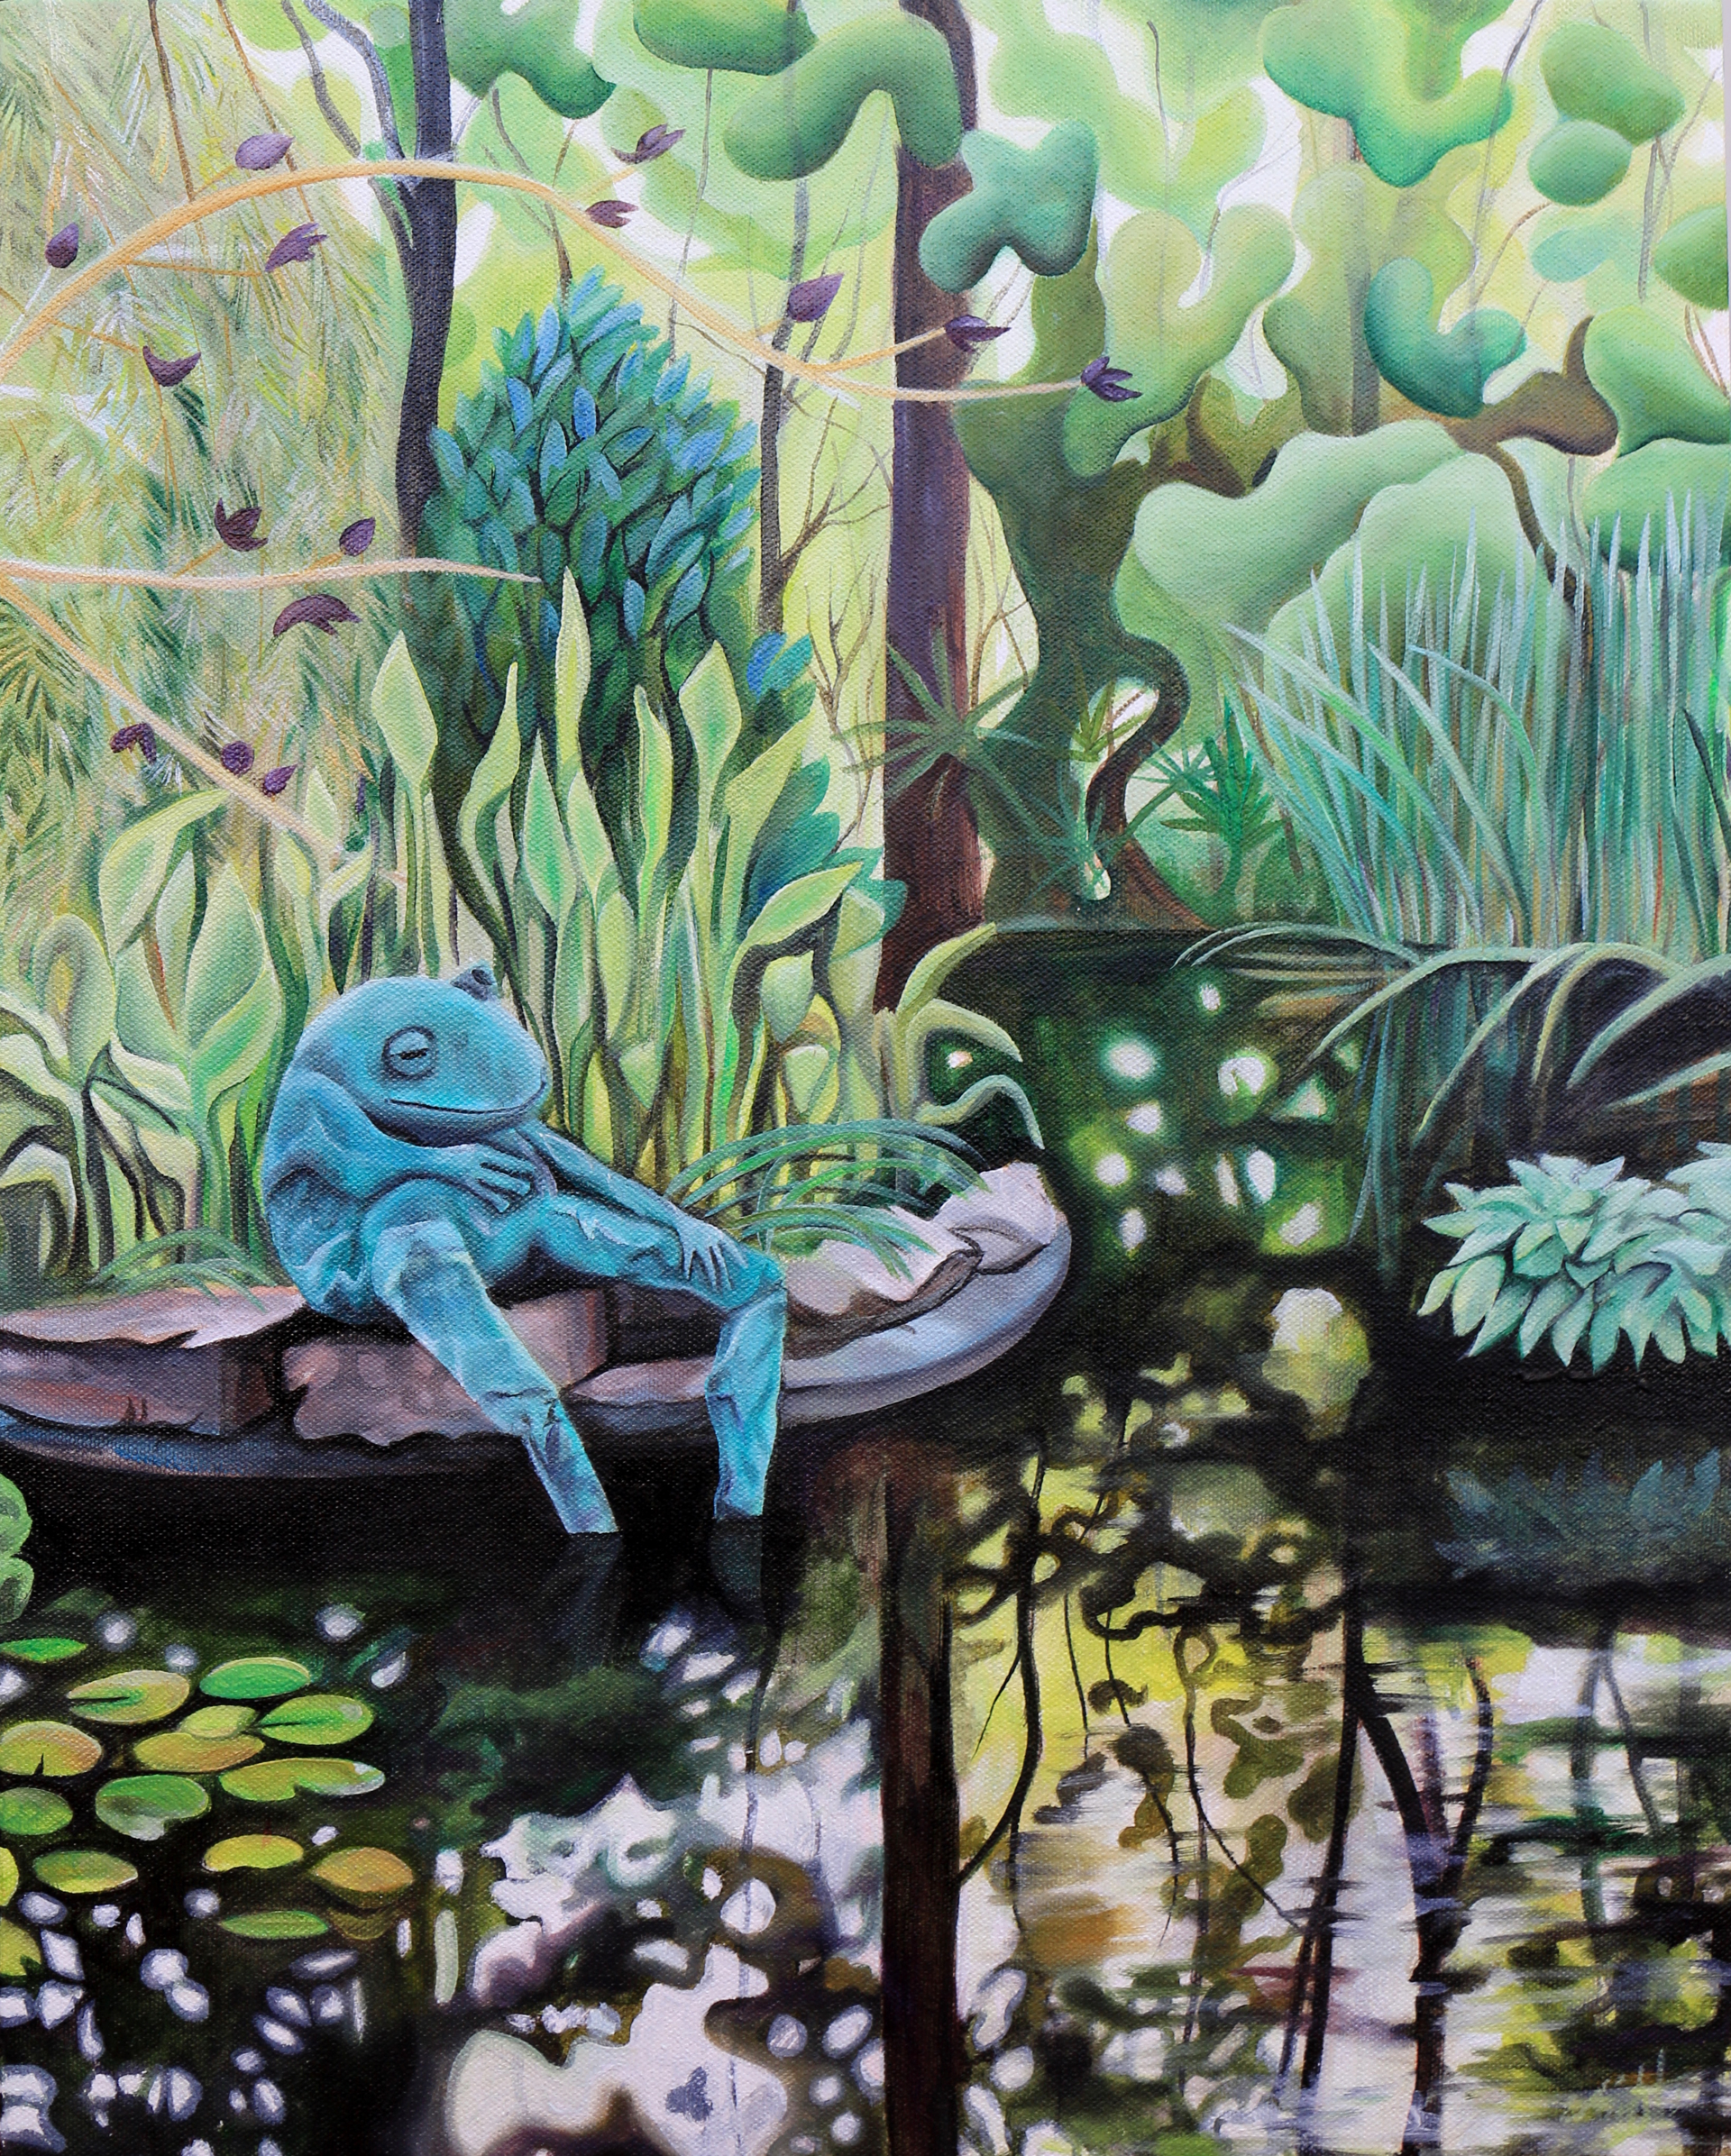 Botanical Garden Frog Pond #2 by Emma Knight